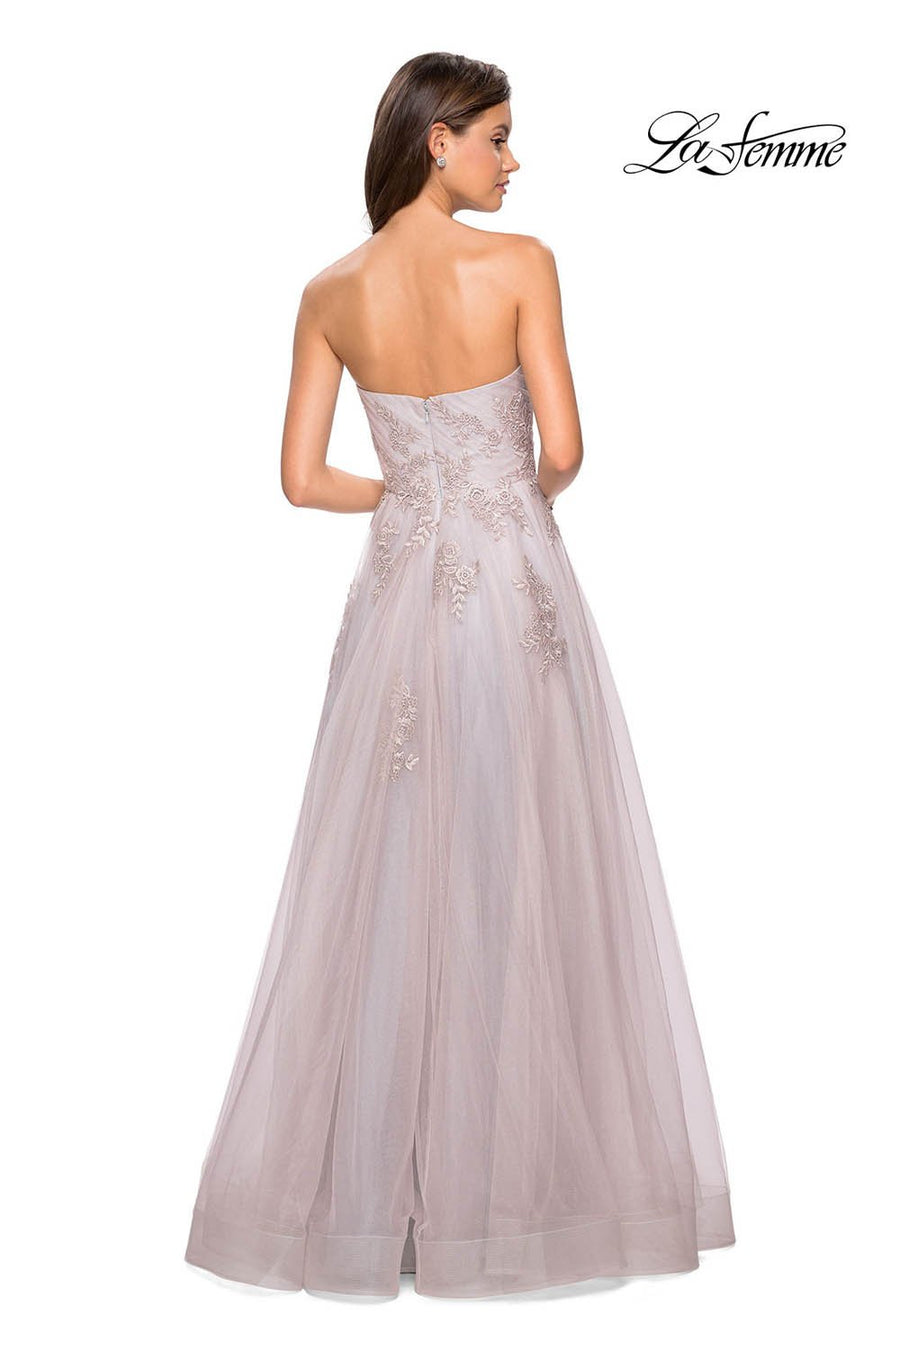 La Femme 27803 prom dress images.  La Femme 27803 is available in these colors: Mauve Silver.